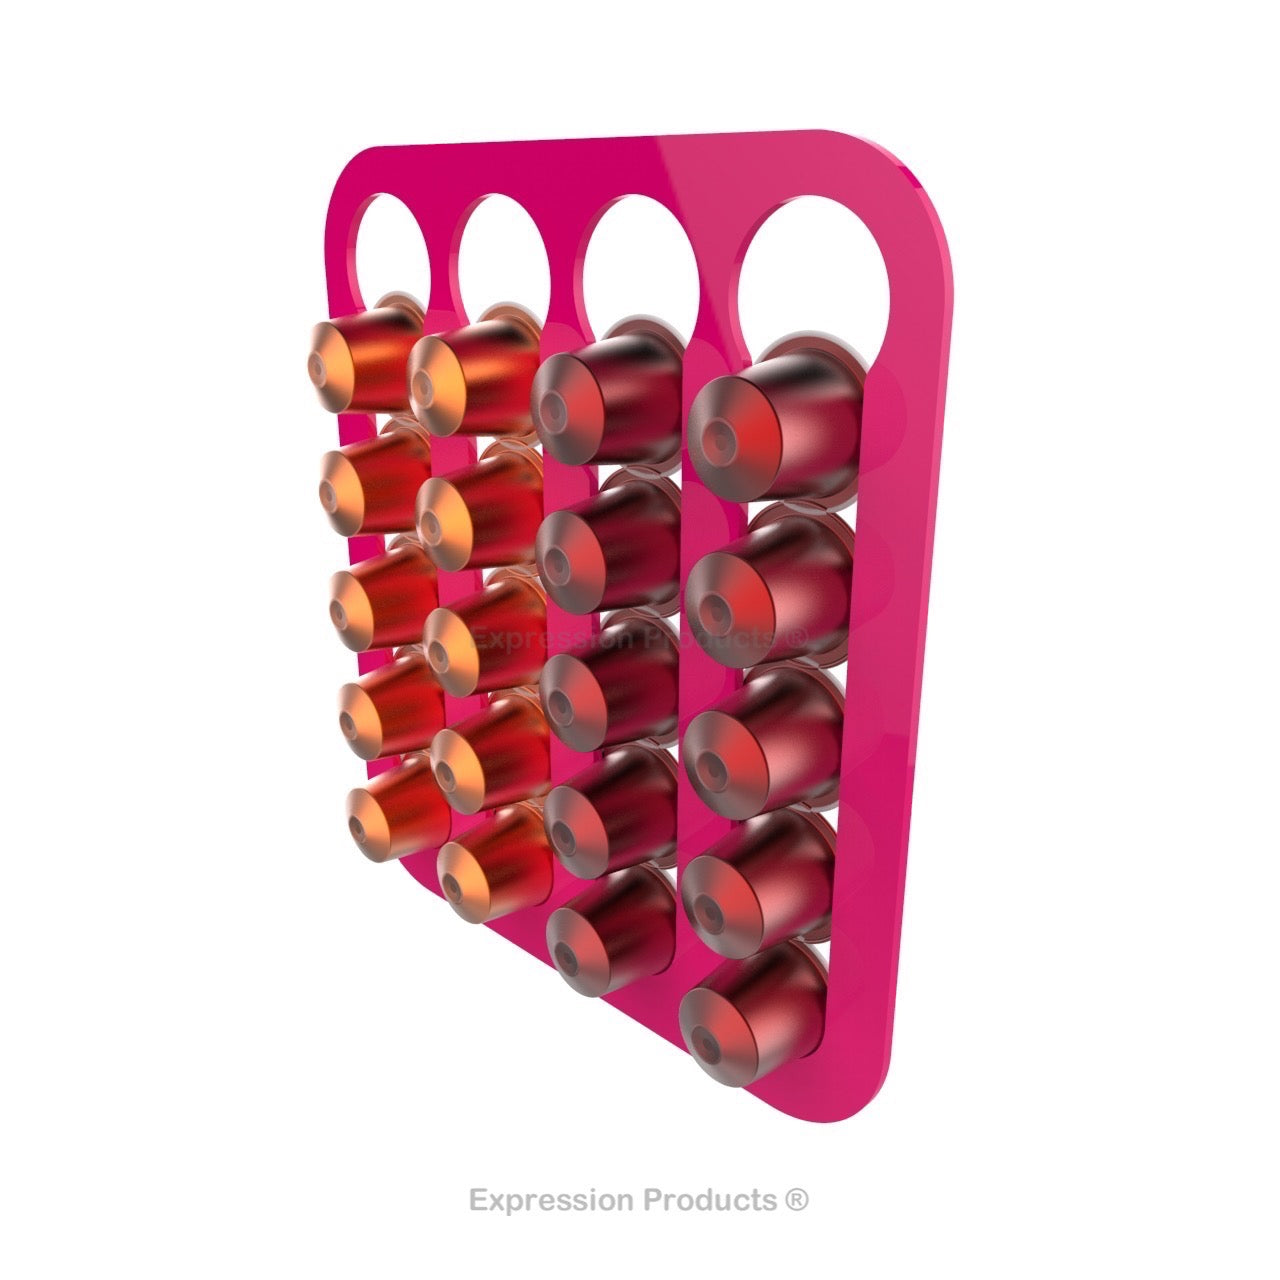 Magnetic Nespresso Original Line coffee pod holder shown in pink holding 20 pods